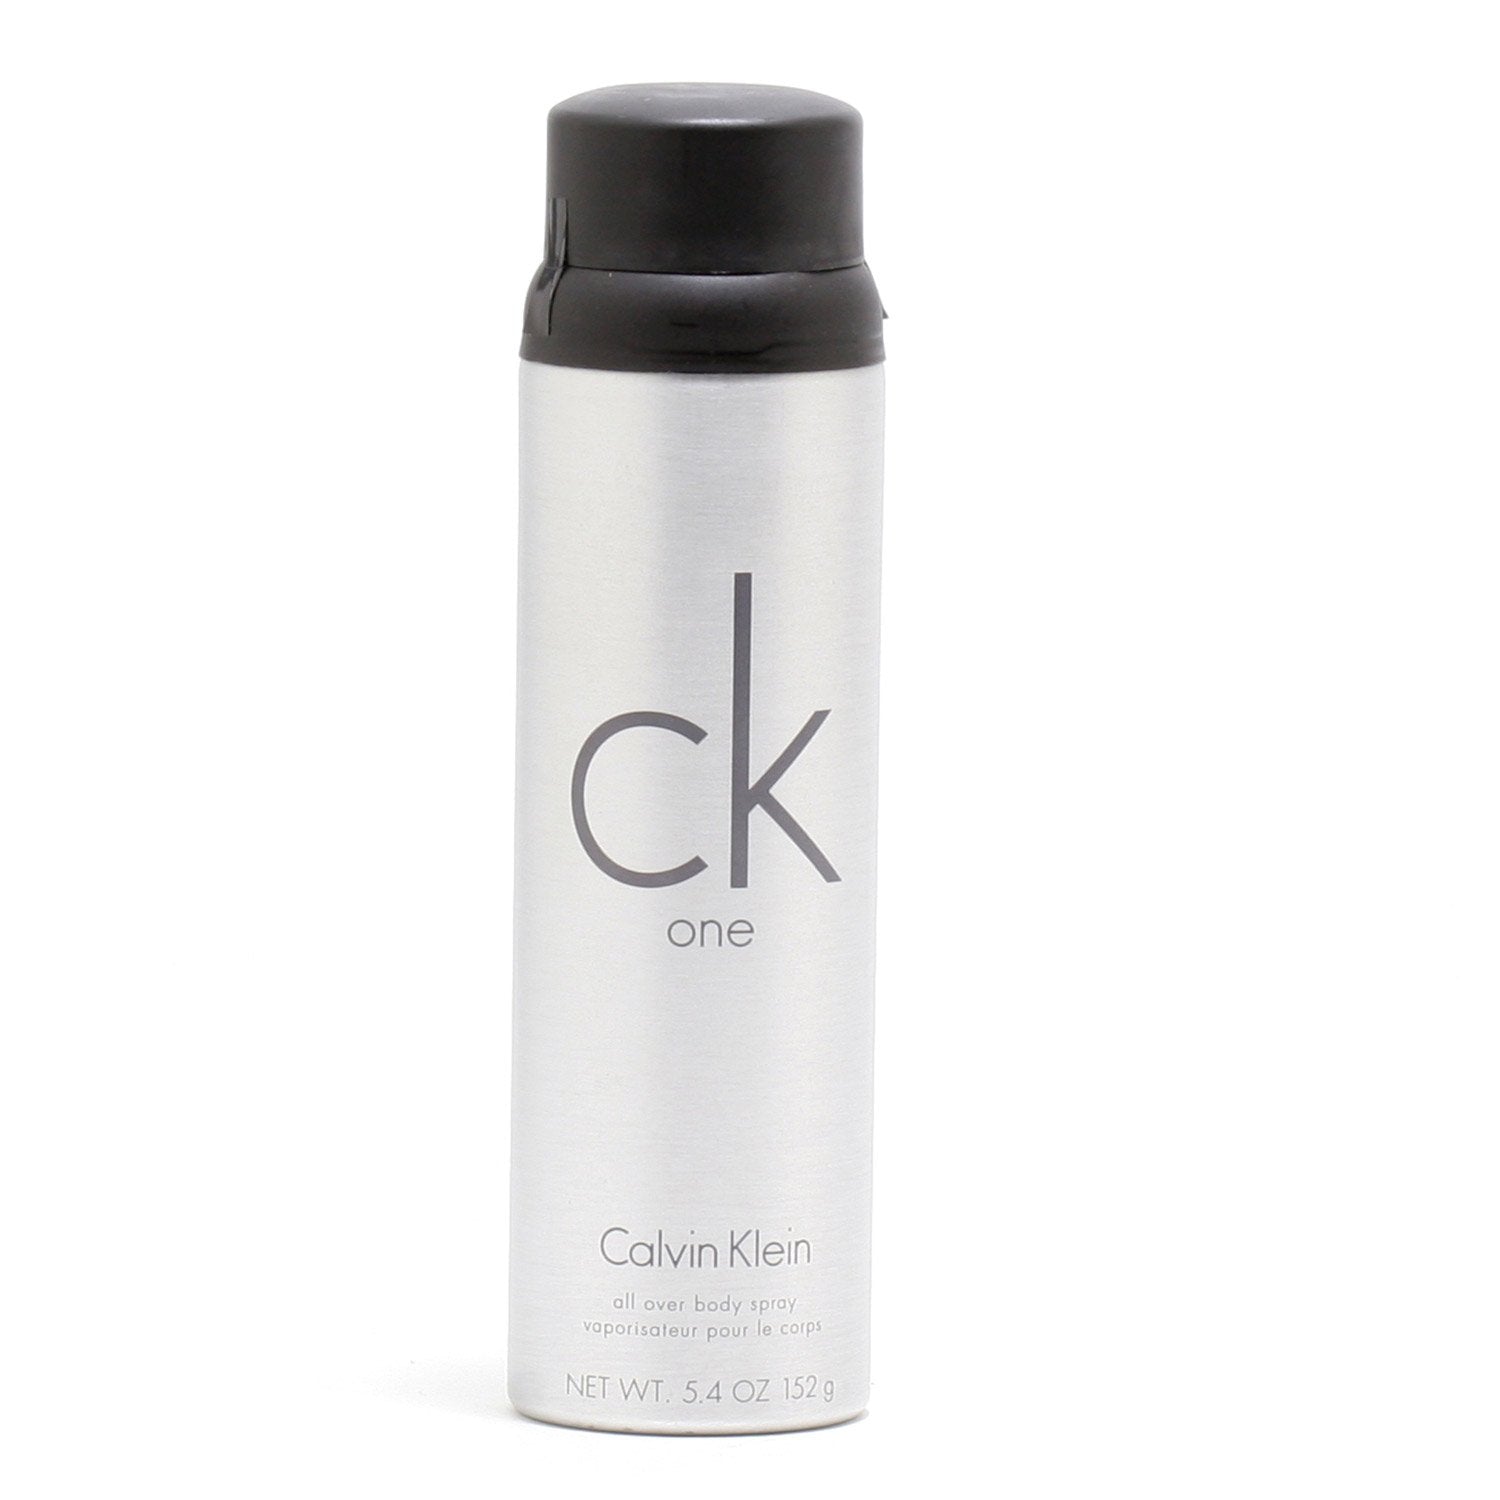 Perfume - CK ONE BY CALVIN KLEIN UNISEX- BODY SPRAY, 5.4 OZ